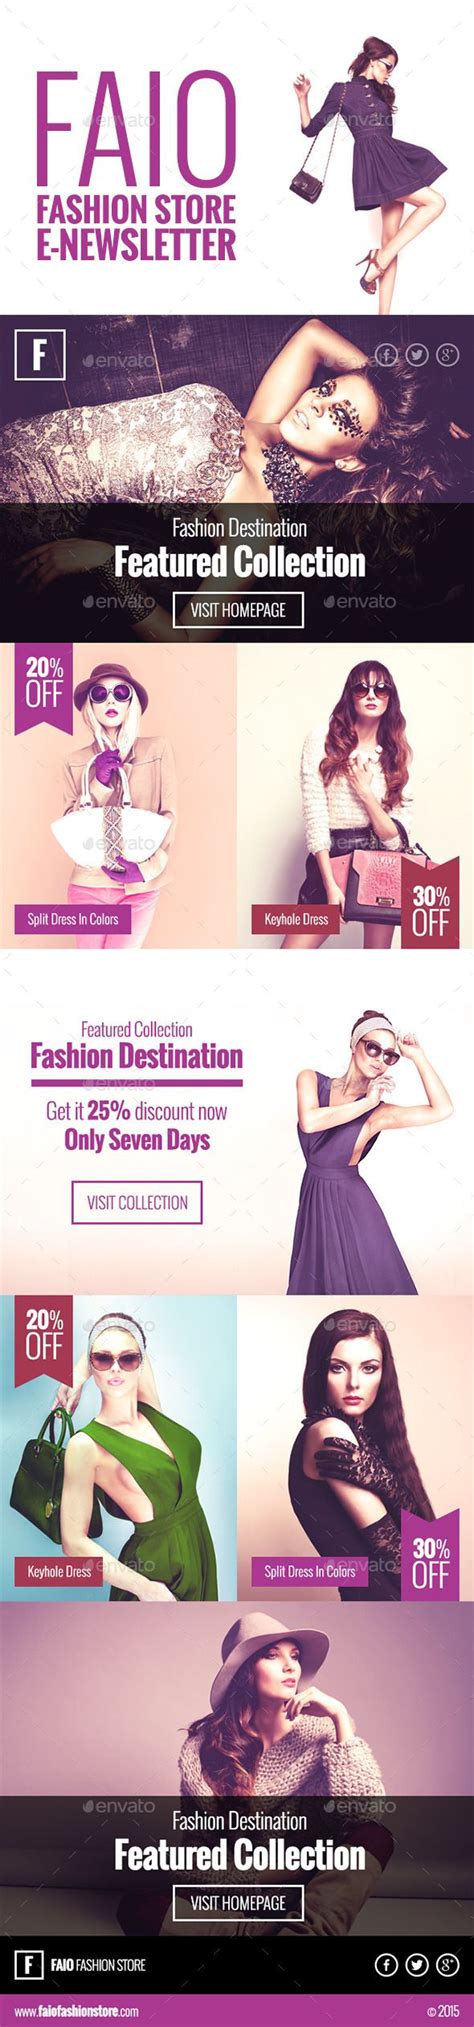 Faio E Newsletter Fashion Store Make It Simple Newsletter Templates